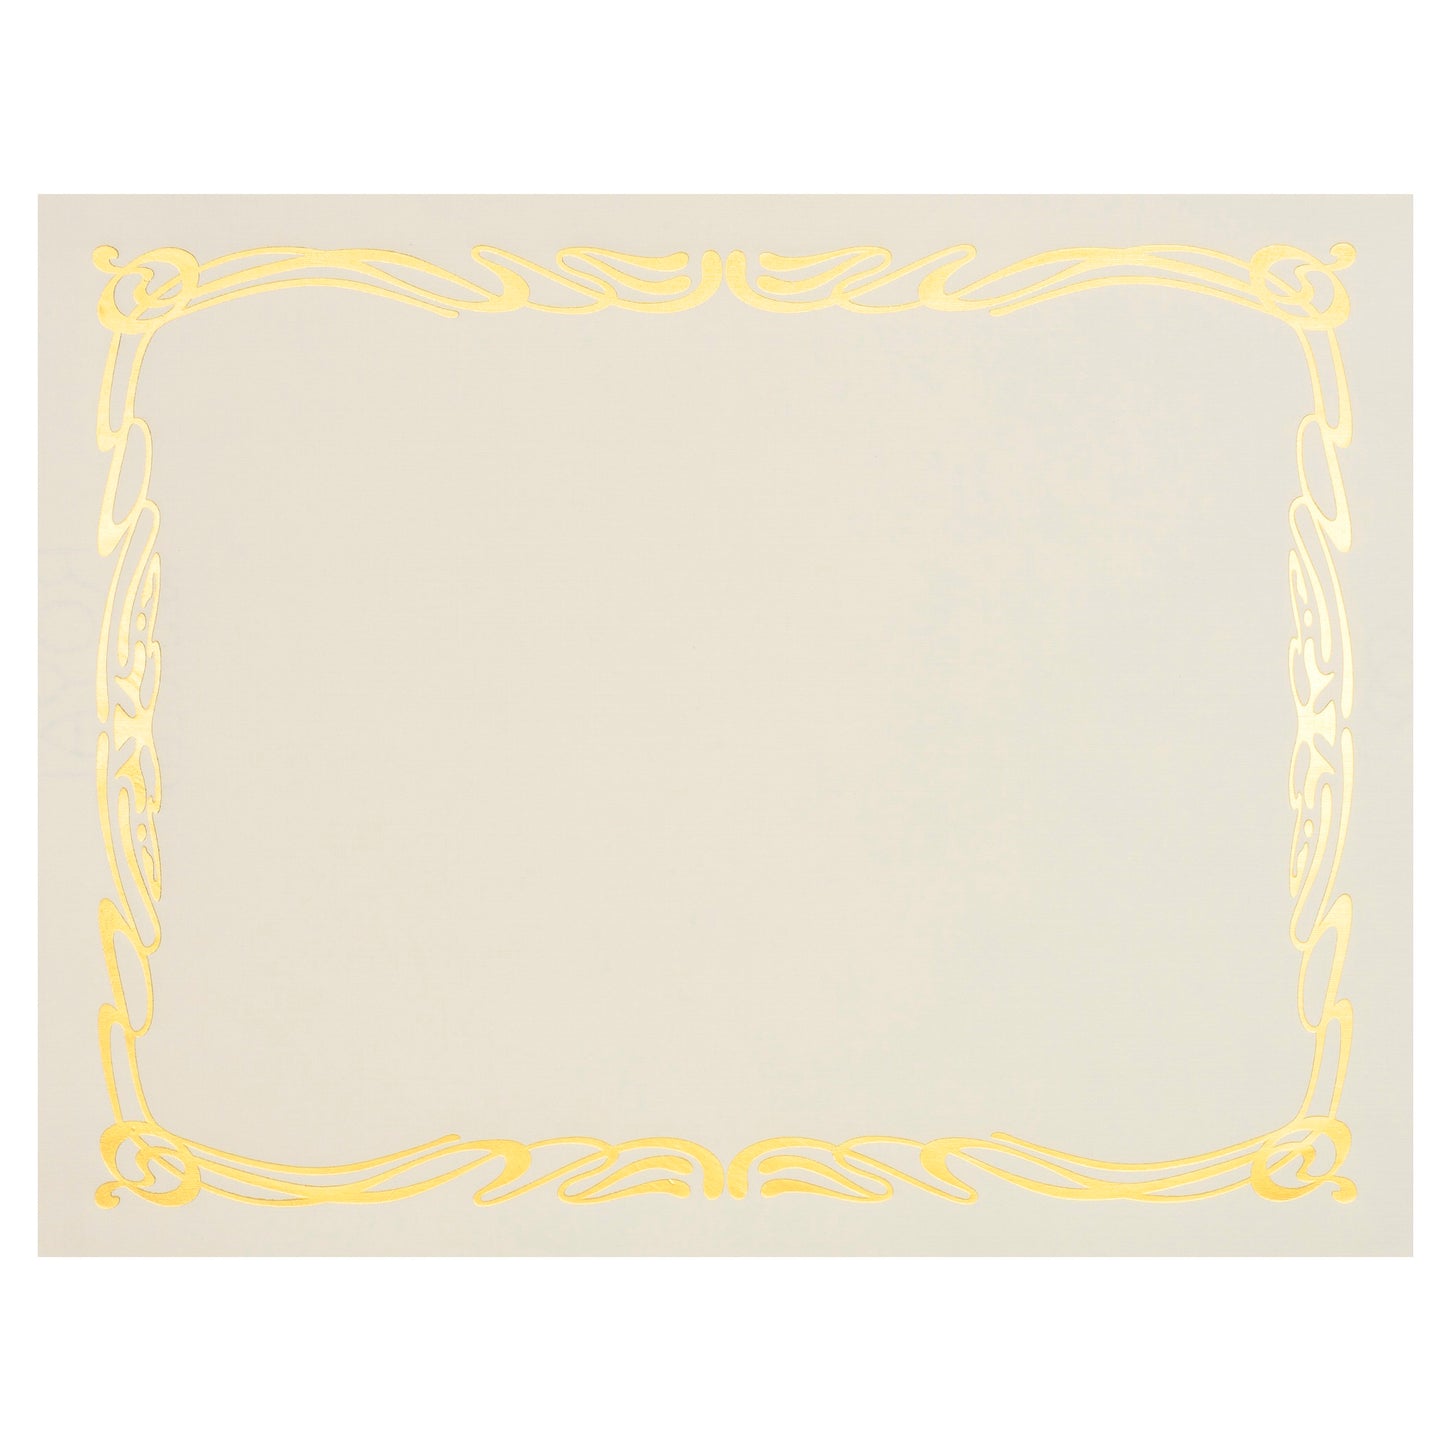 St. James® Elite™ Certificates, Natural Linen with Deco Gold Foil Design, Pack of 12